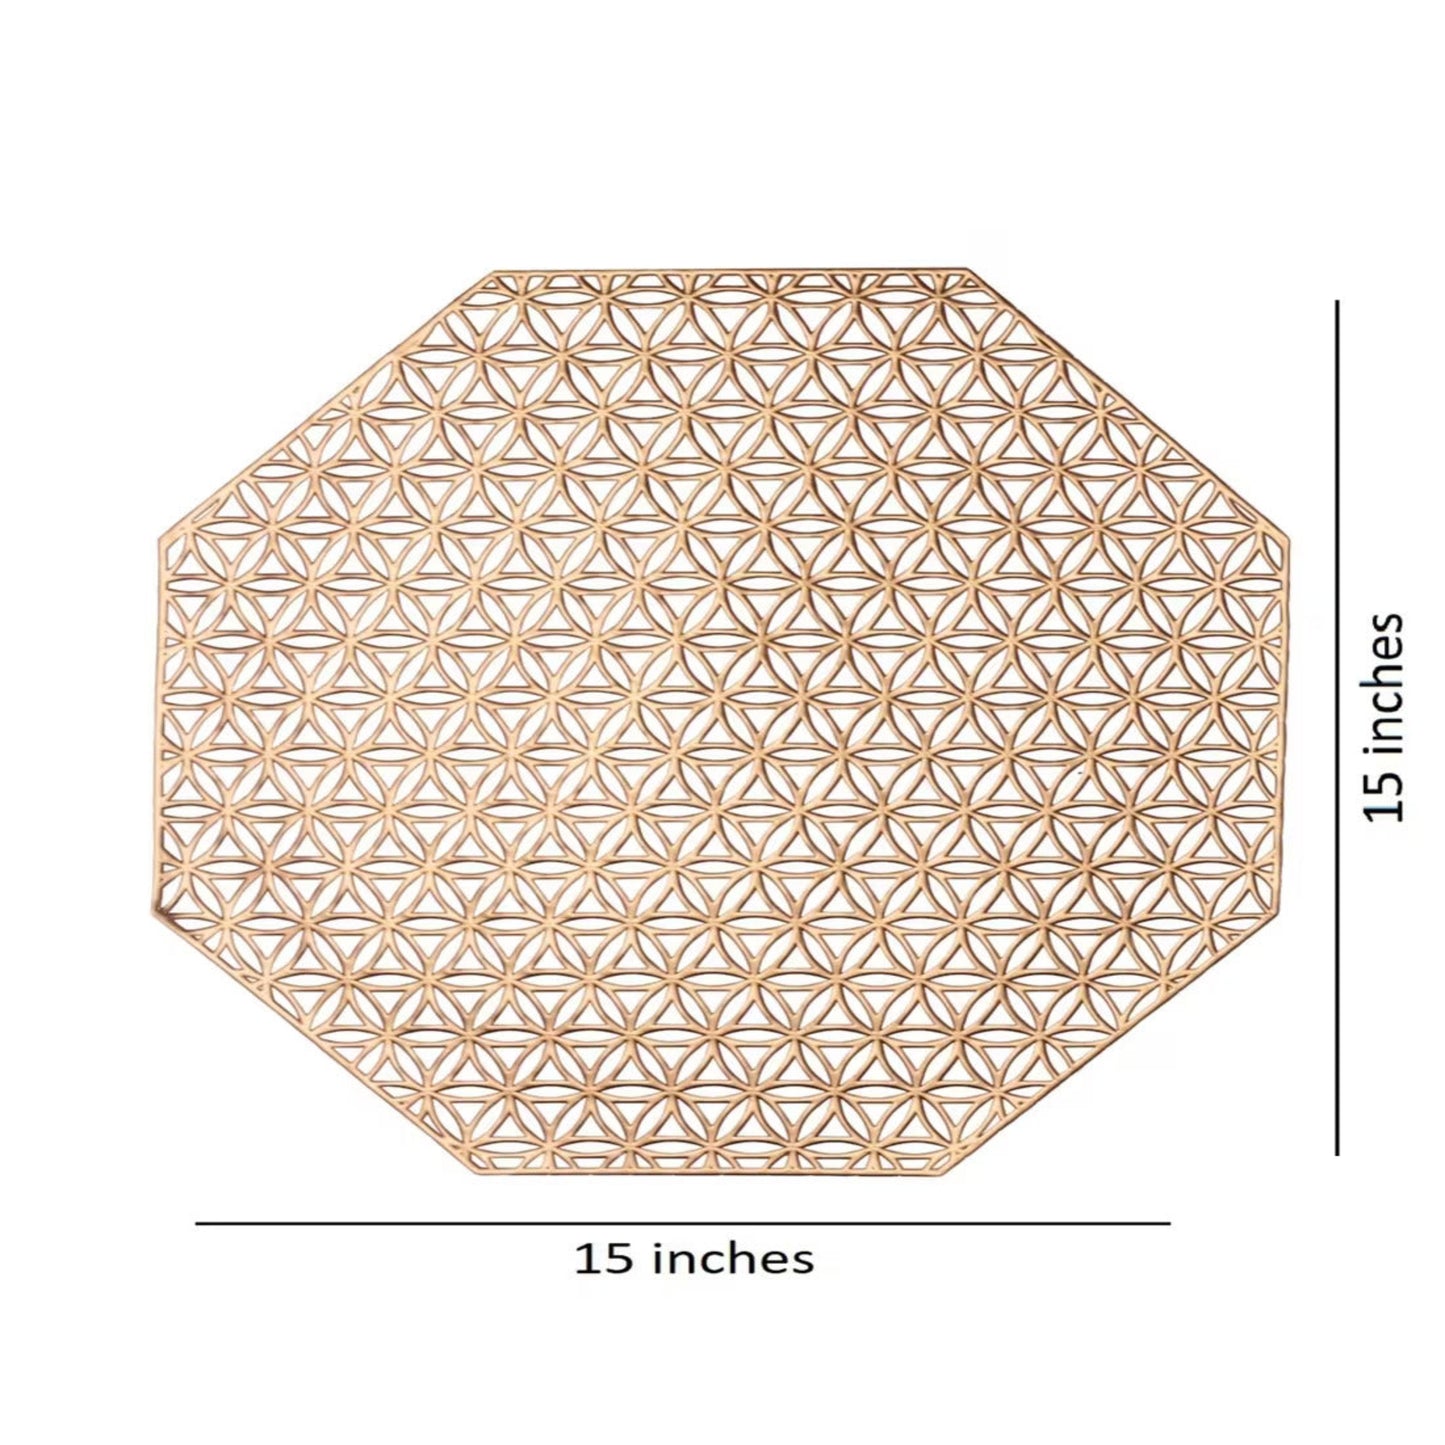 Hexagonal gold Placemat - Set of 2